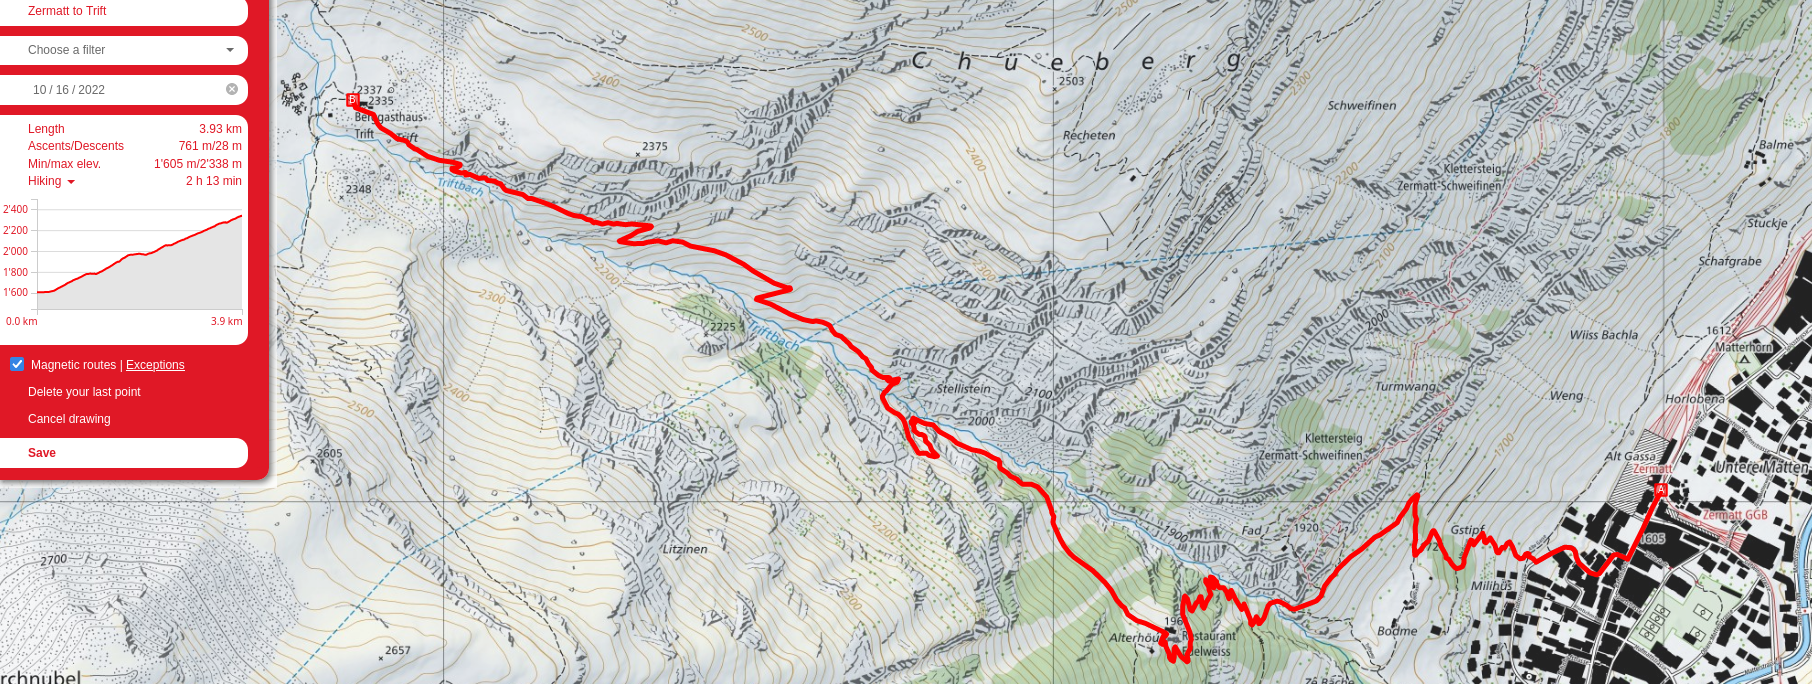 Zermatt to Trift route map